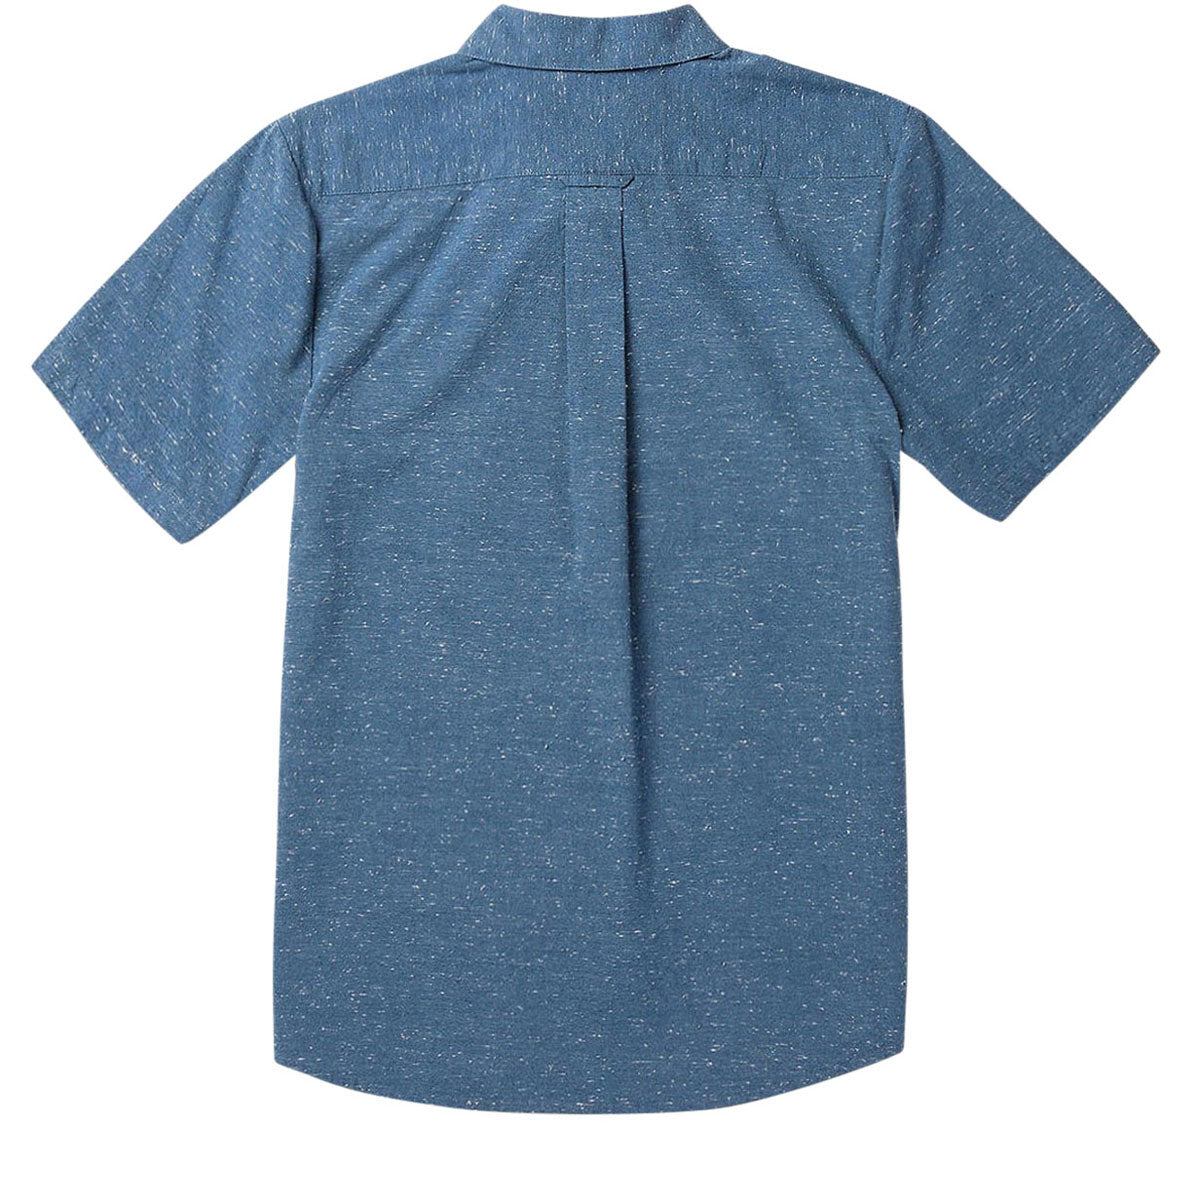 Volcom Date Knight Shirt - Stone Blue image 2